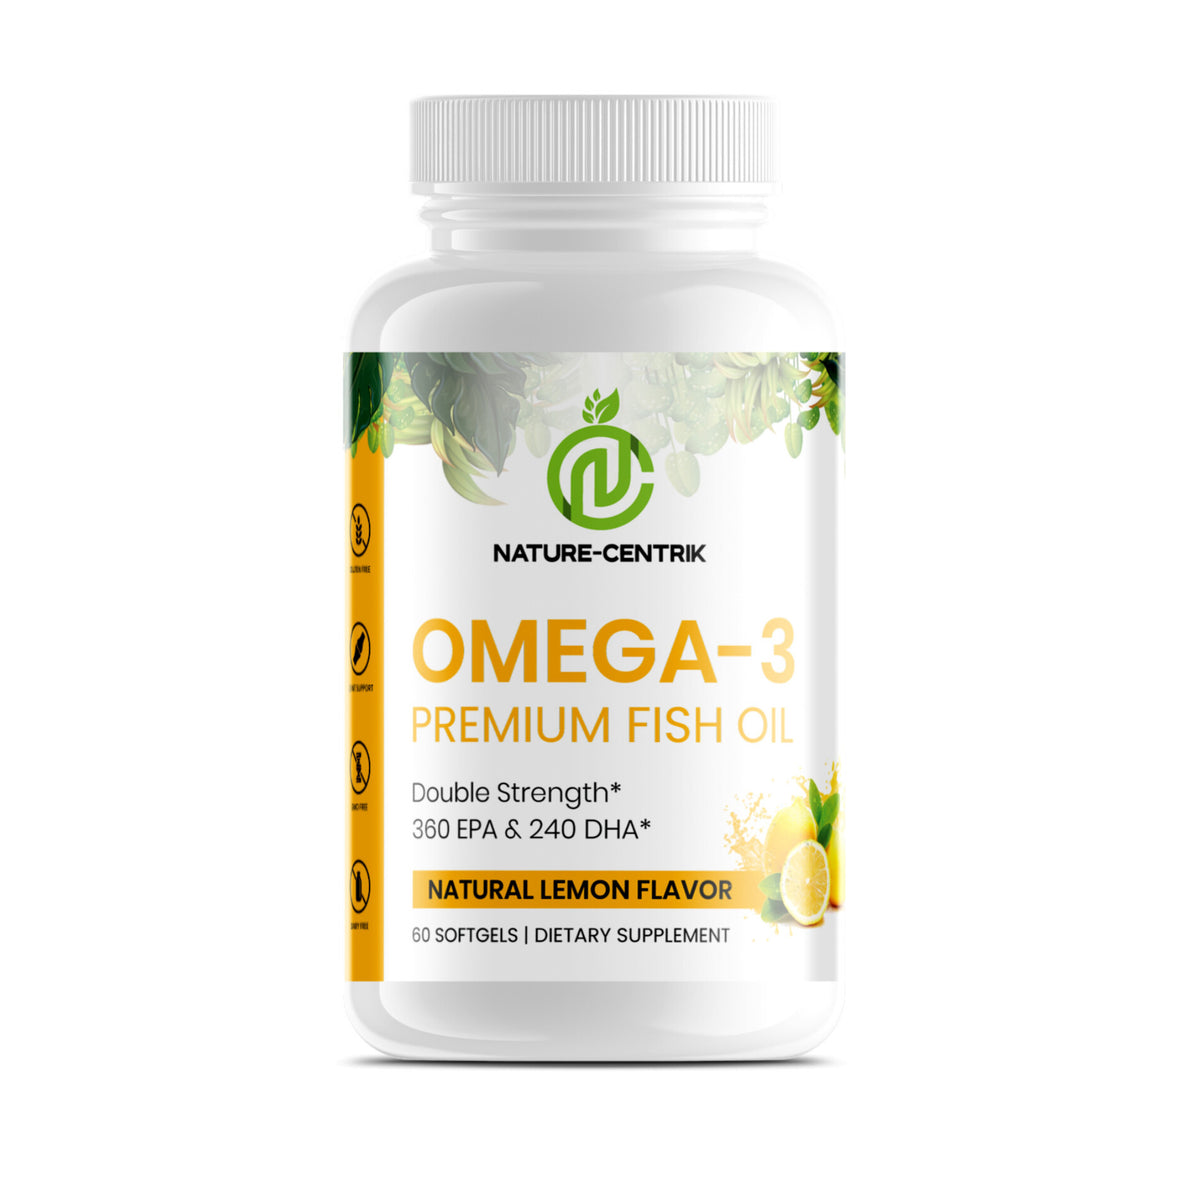 100% Organic- Omega-3 Fish Oil